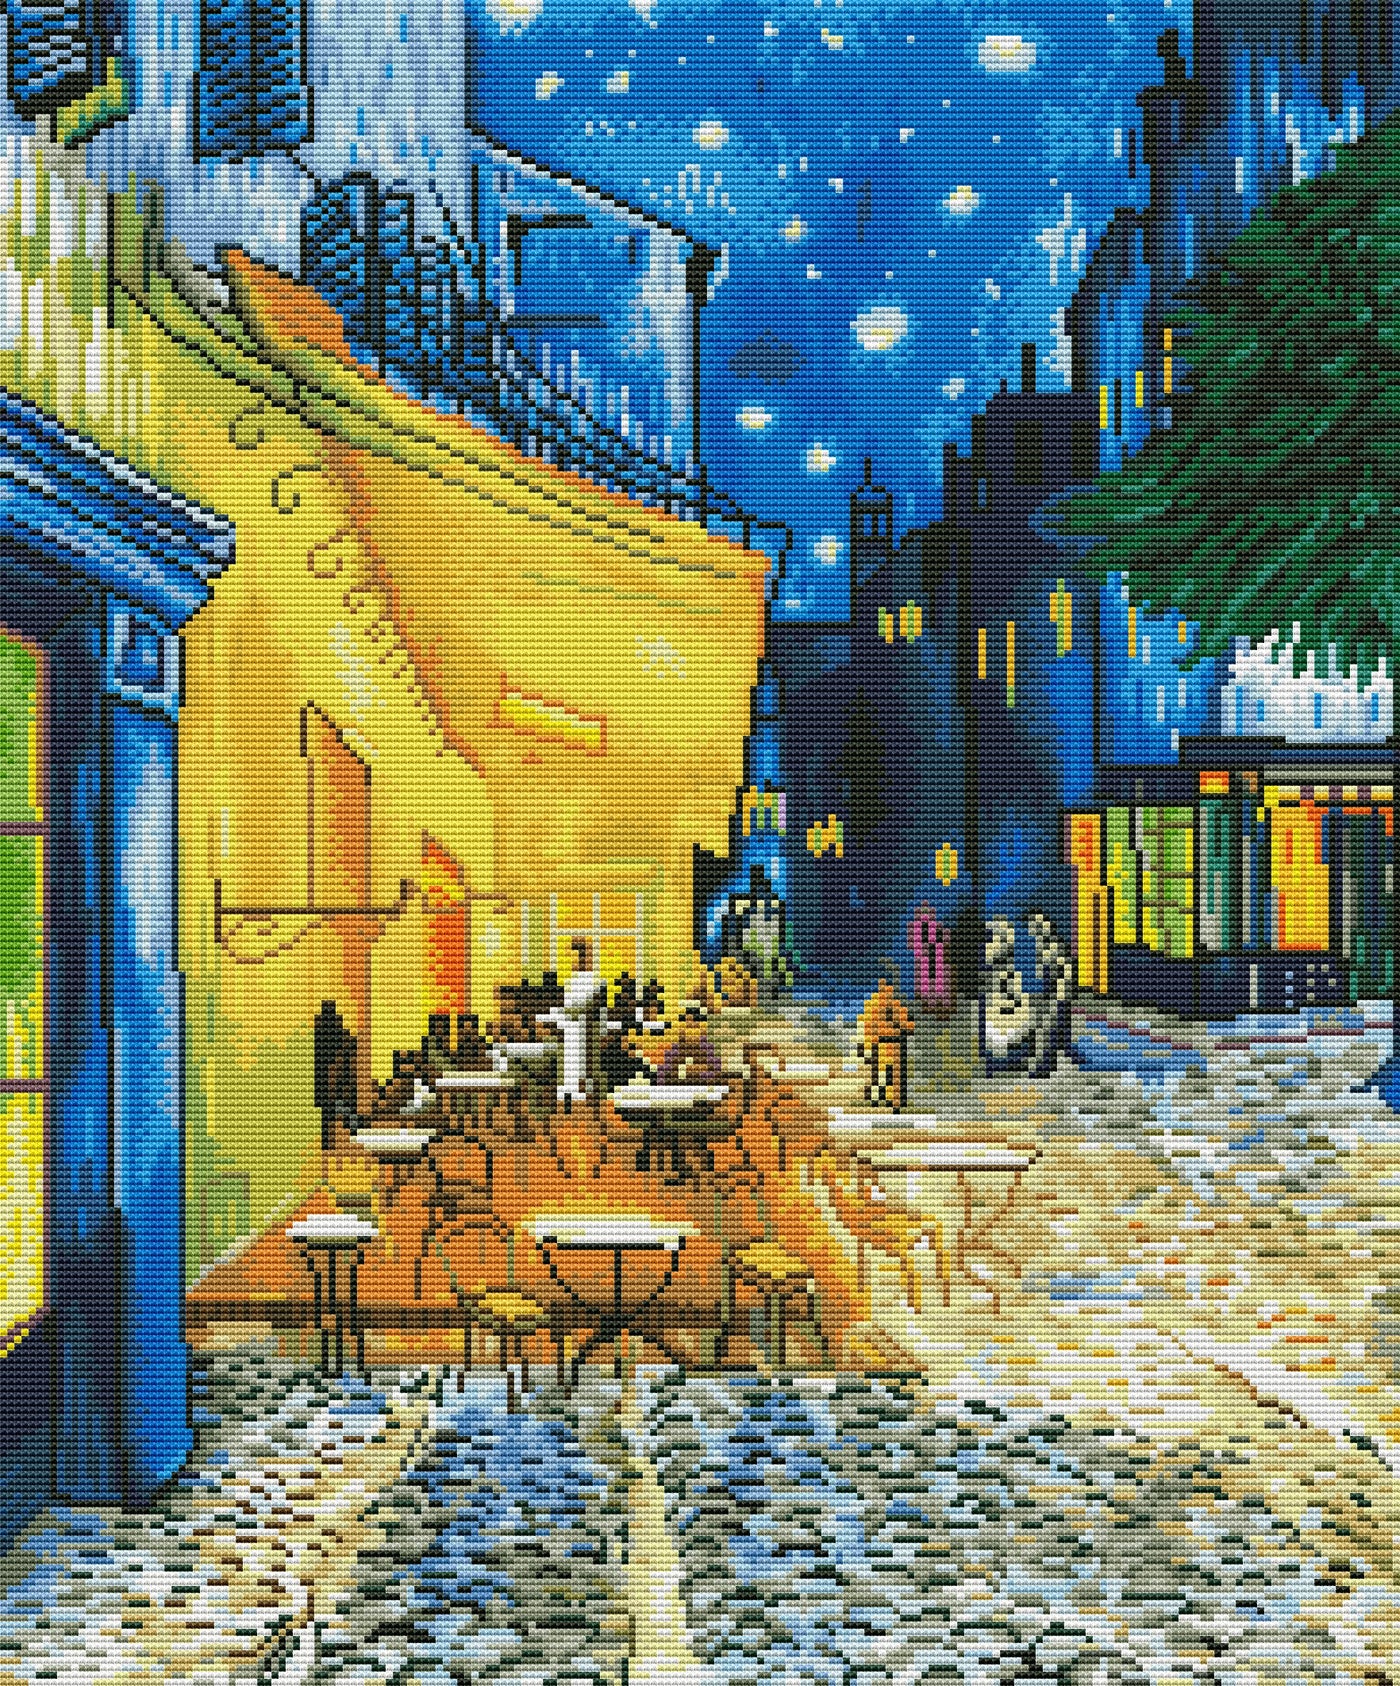 Café Terrace at Night (1888)